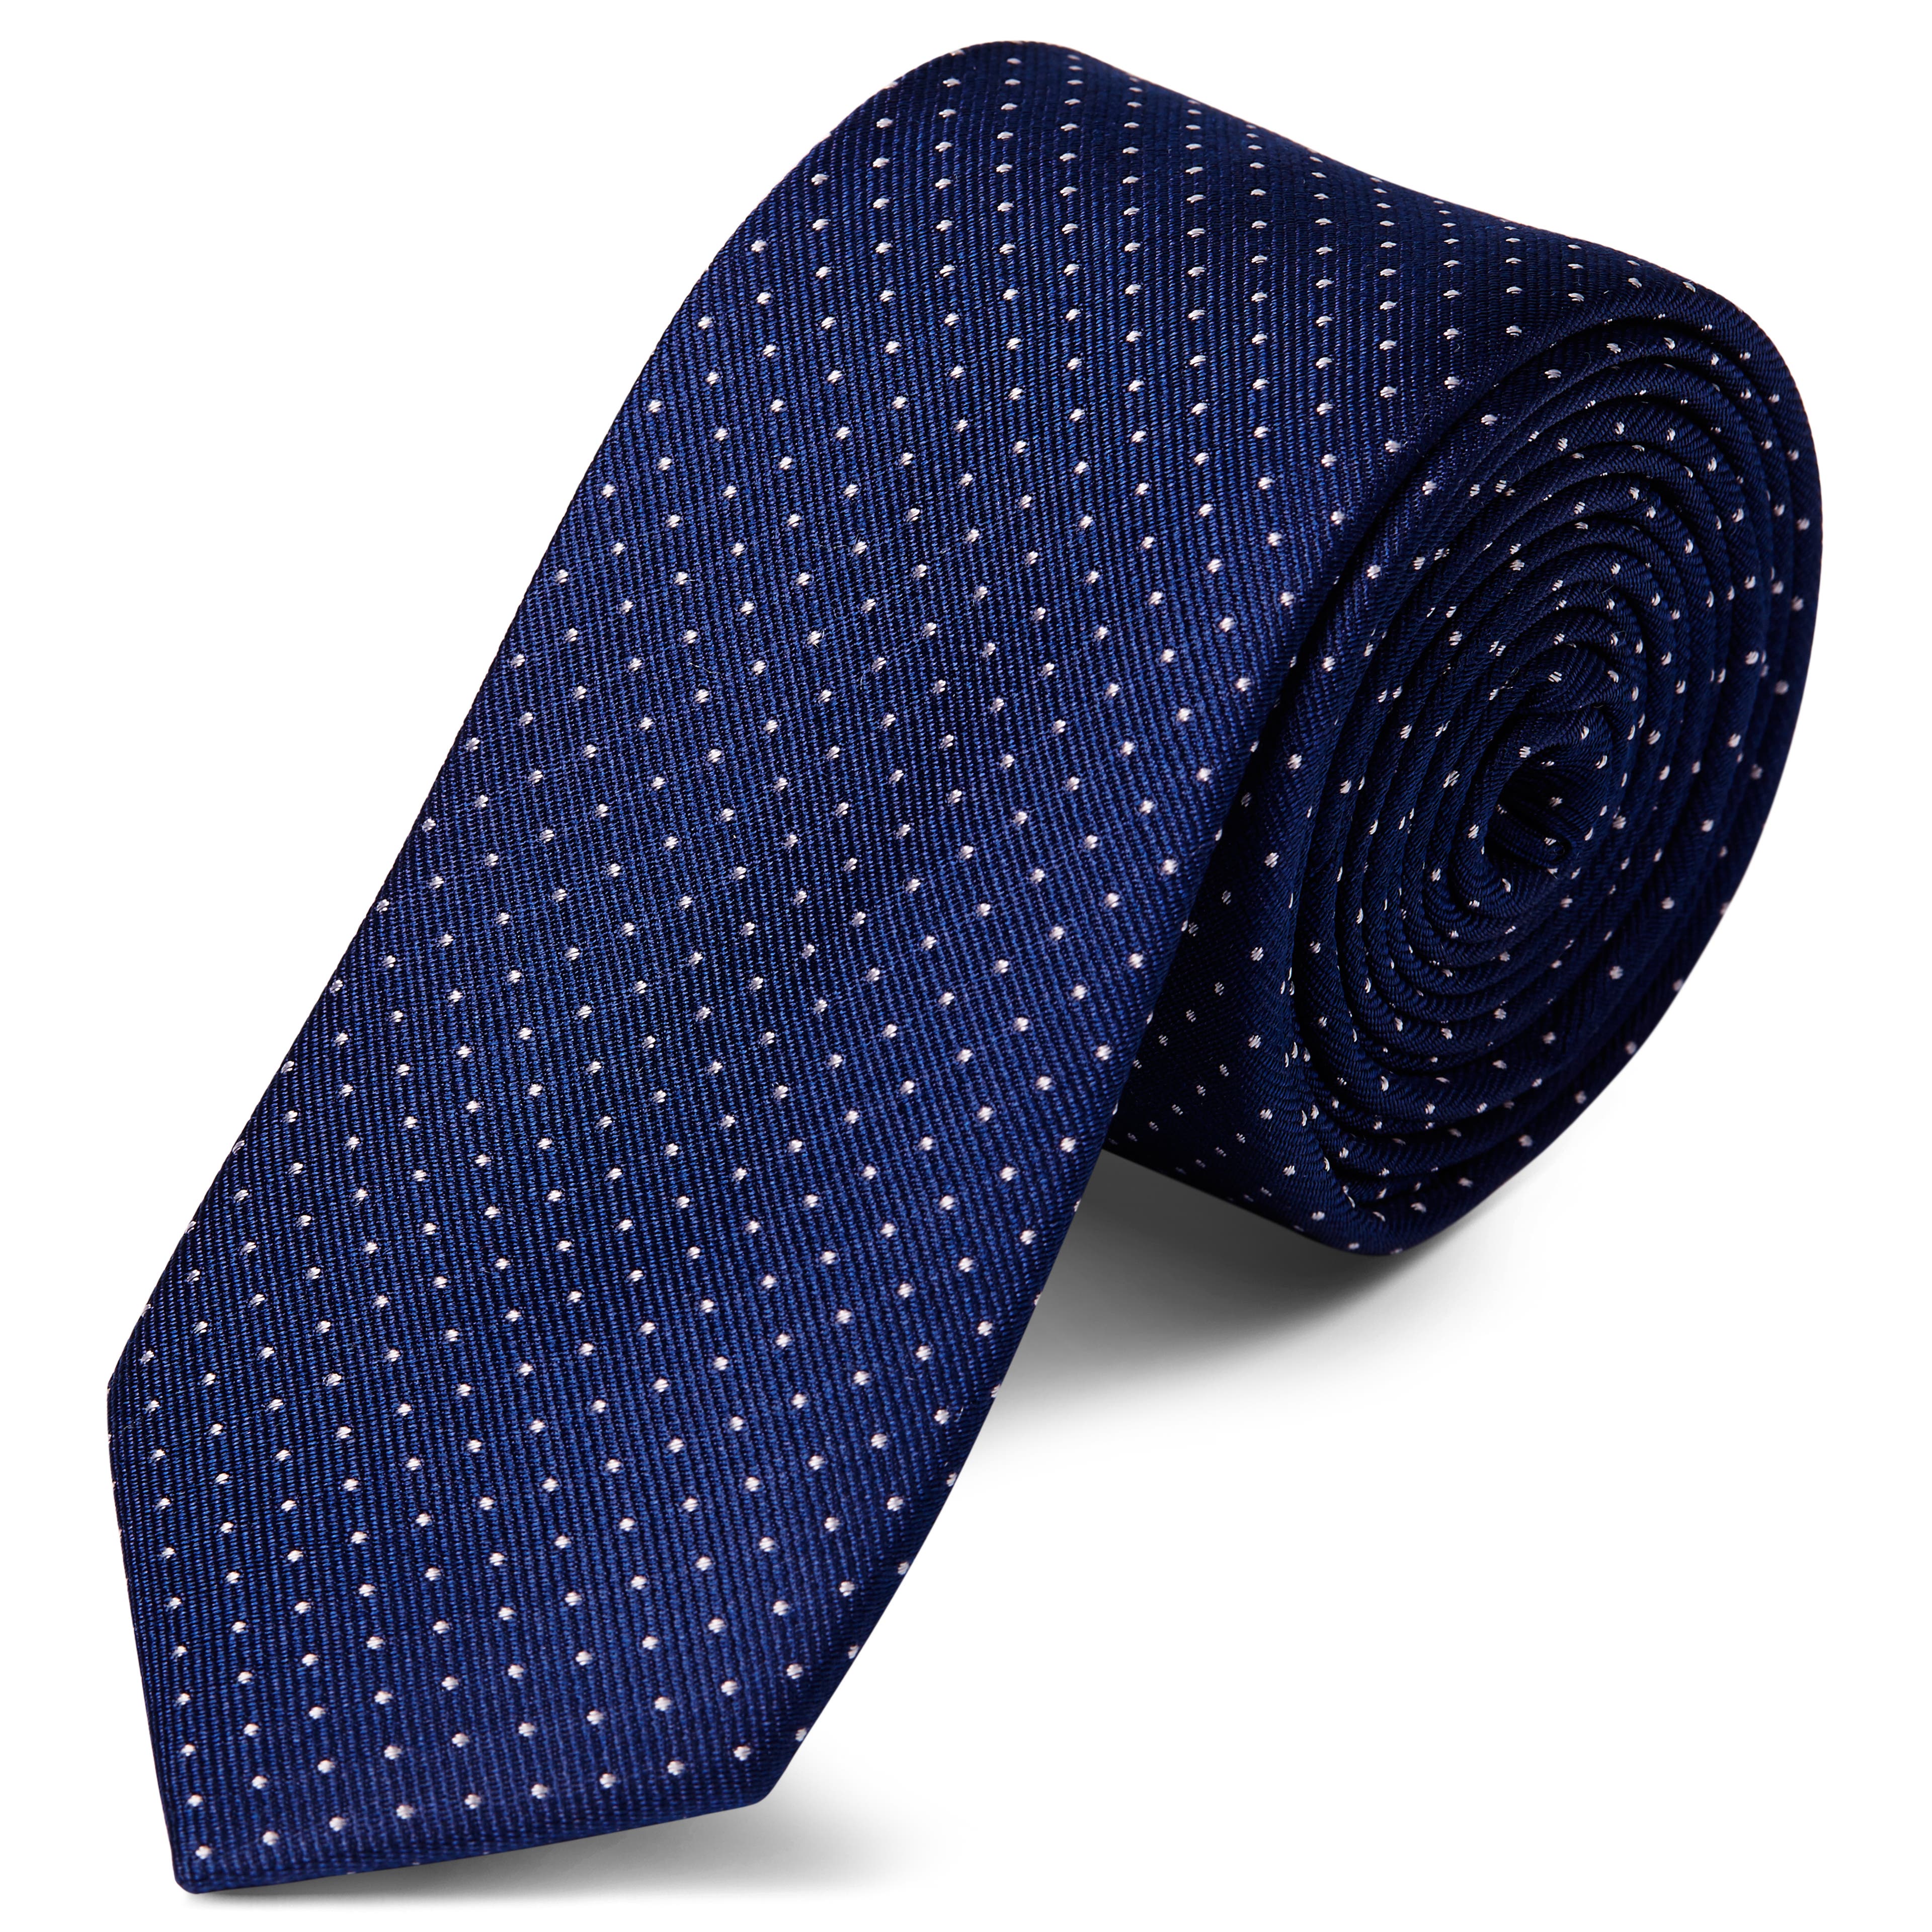 Cravatta blu navy in seta da 6 cm con motivo a pois